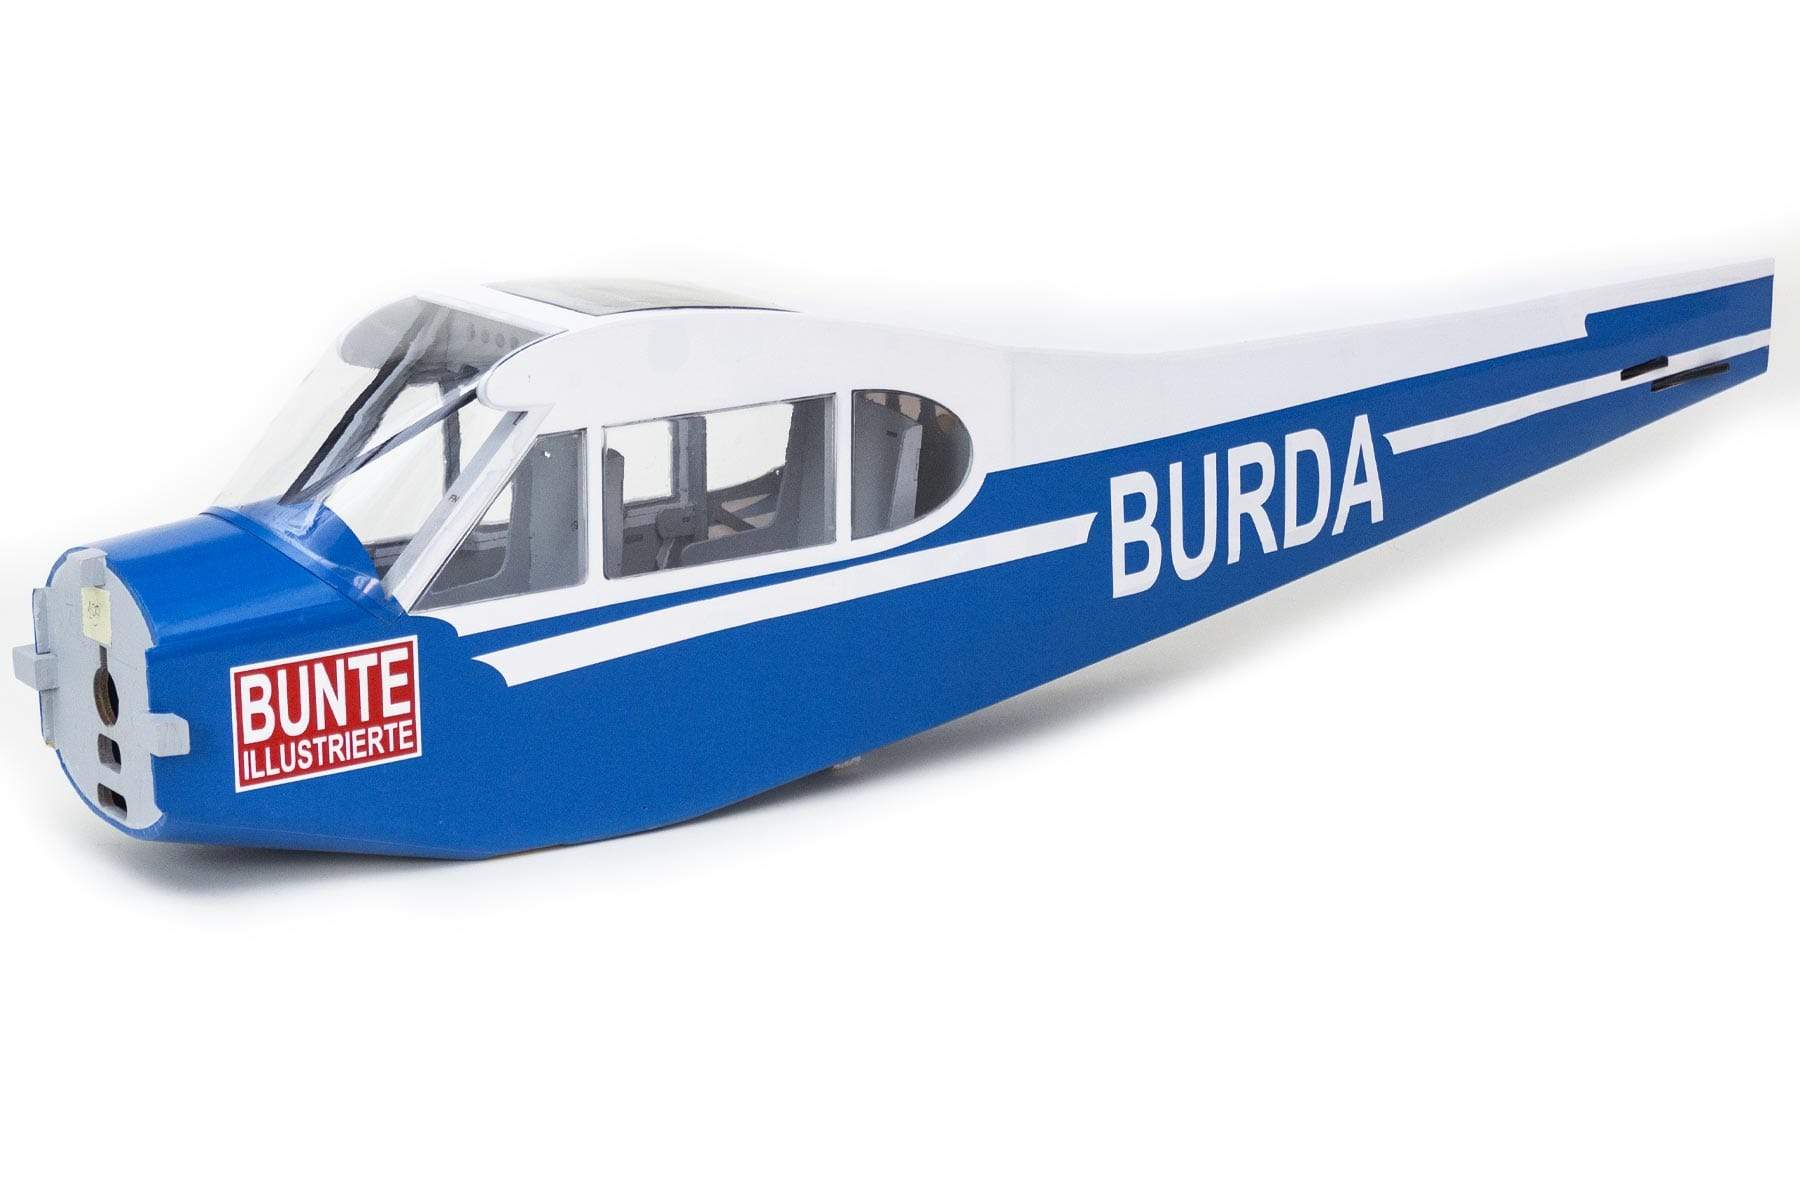 Nexa 1620mm Piper PA-18 Super Cub Burda Fuselage NXA1015-101